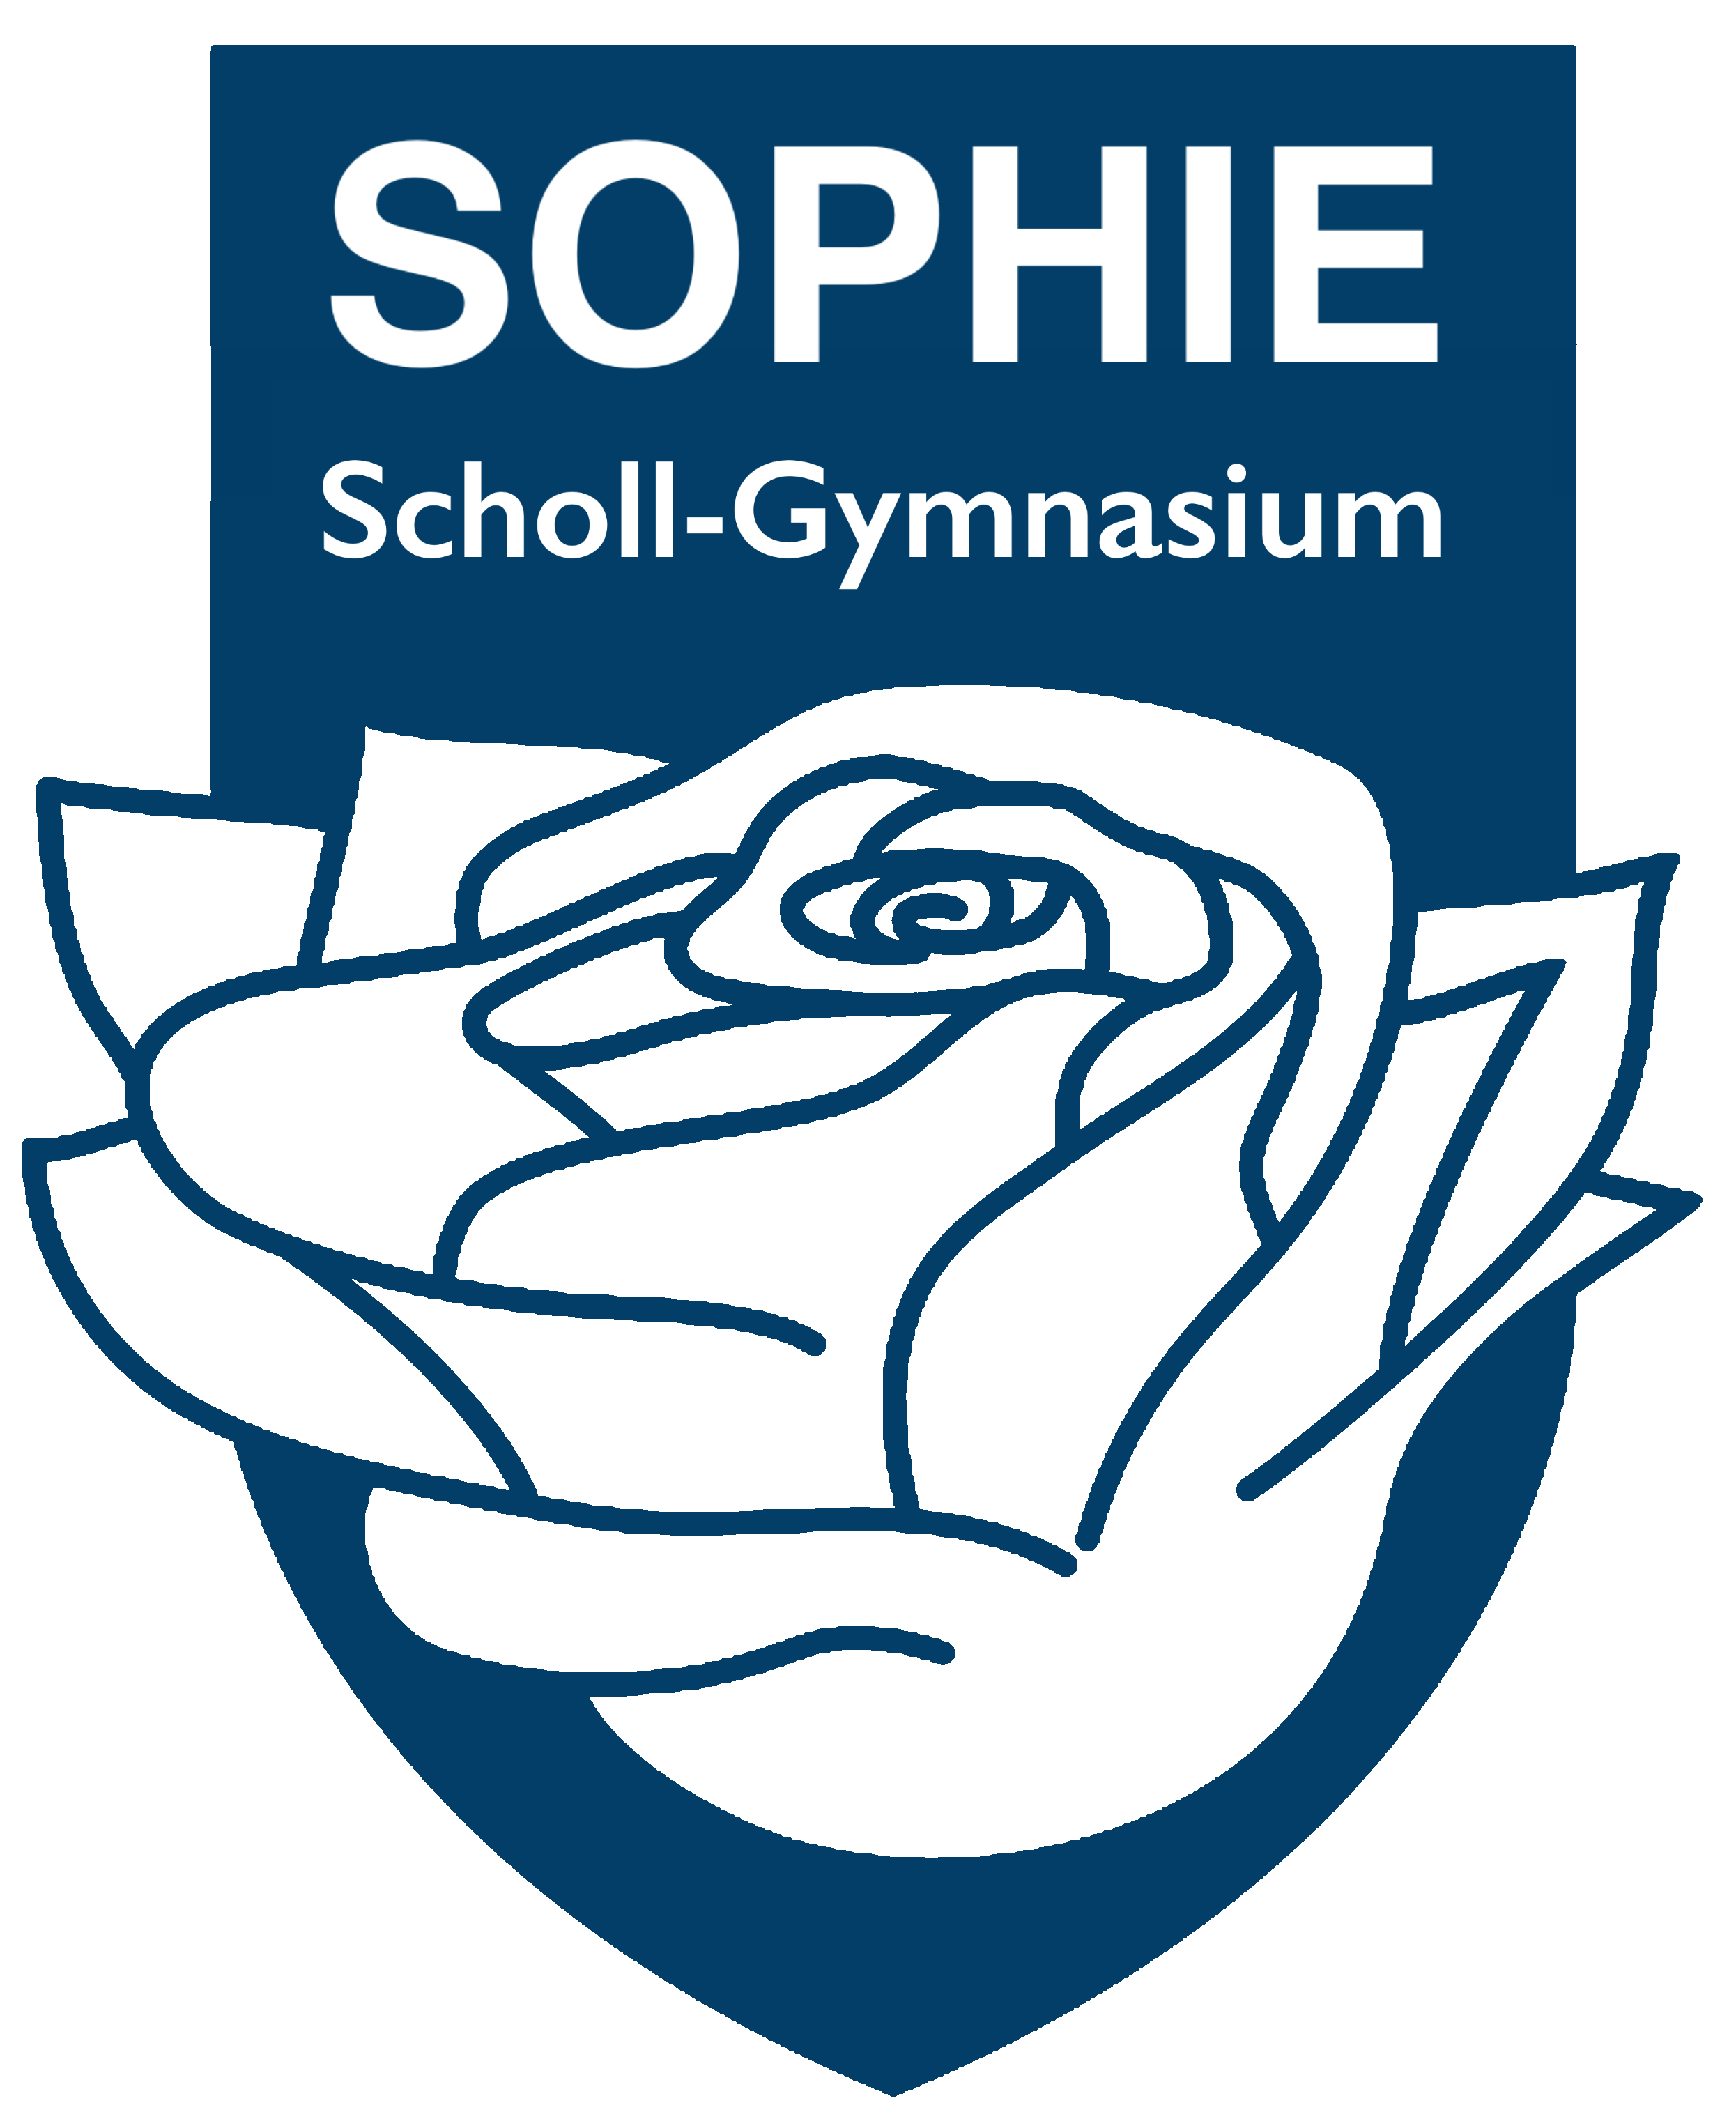 Das SOPHIE-Scholl-Gymnasium in Oberhausen